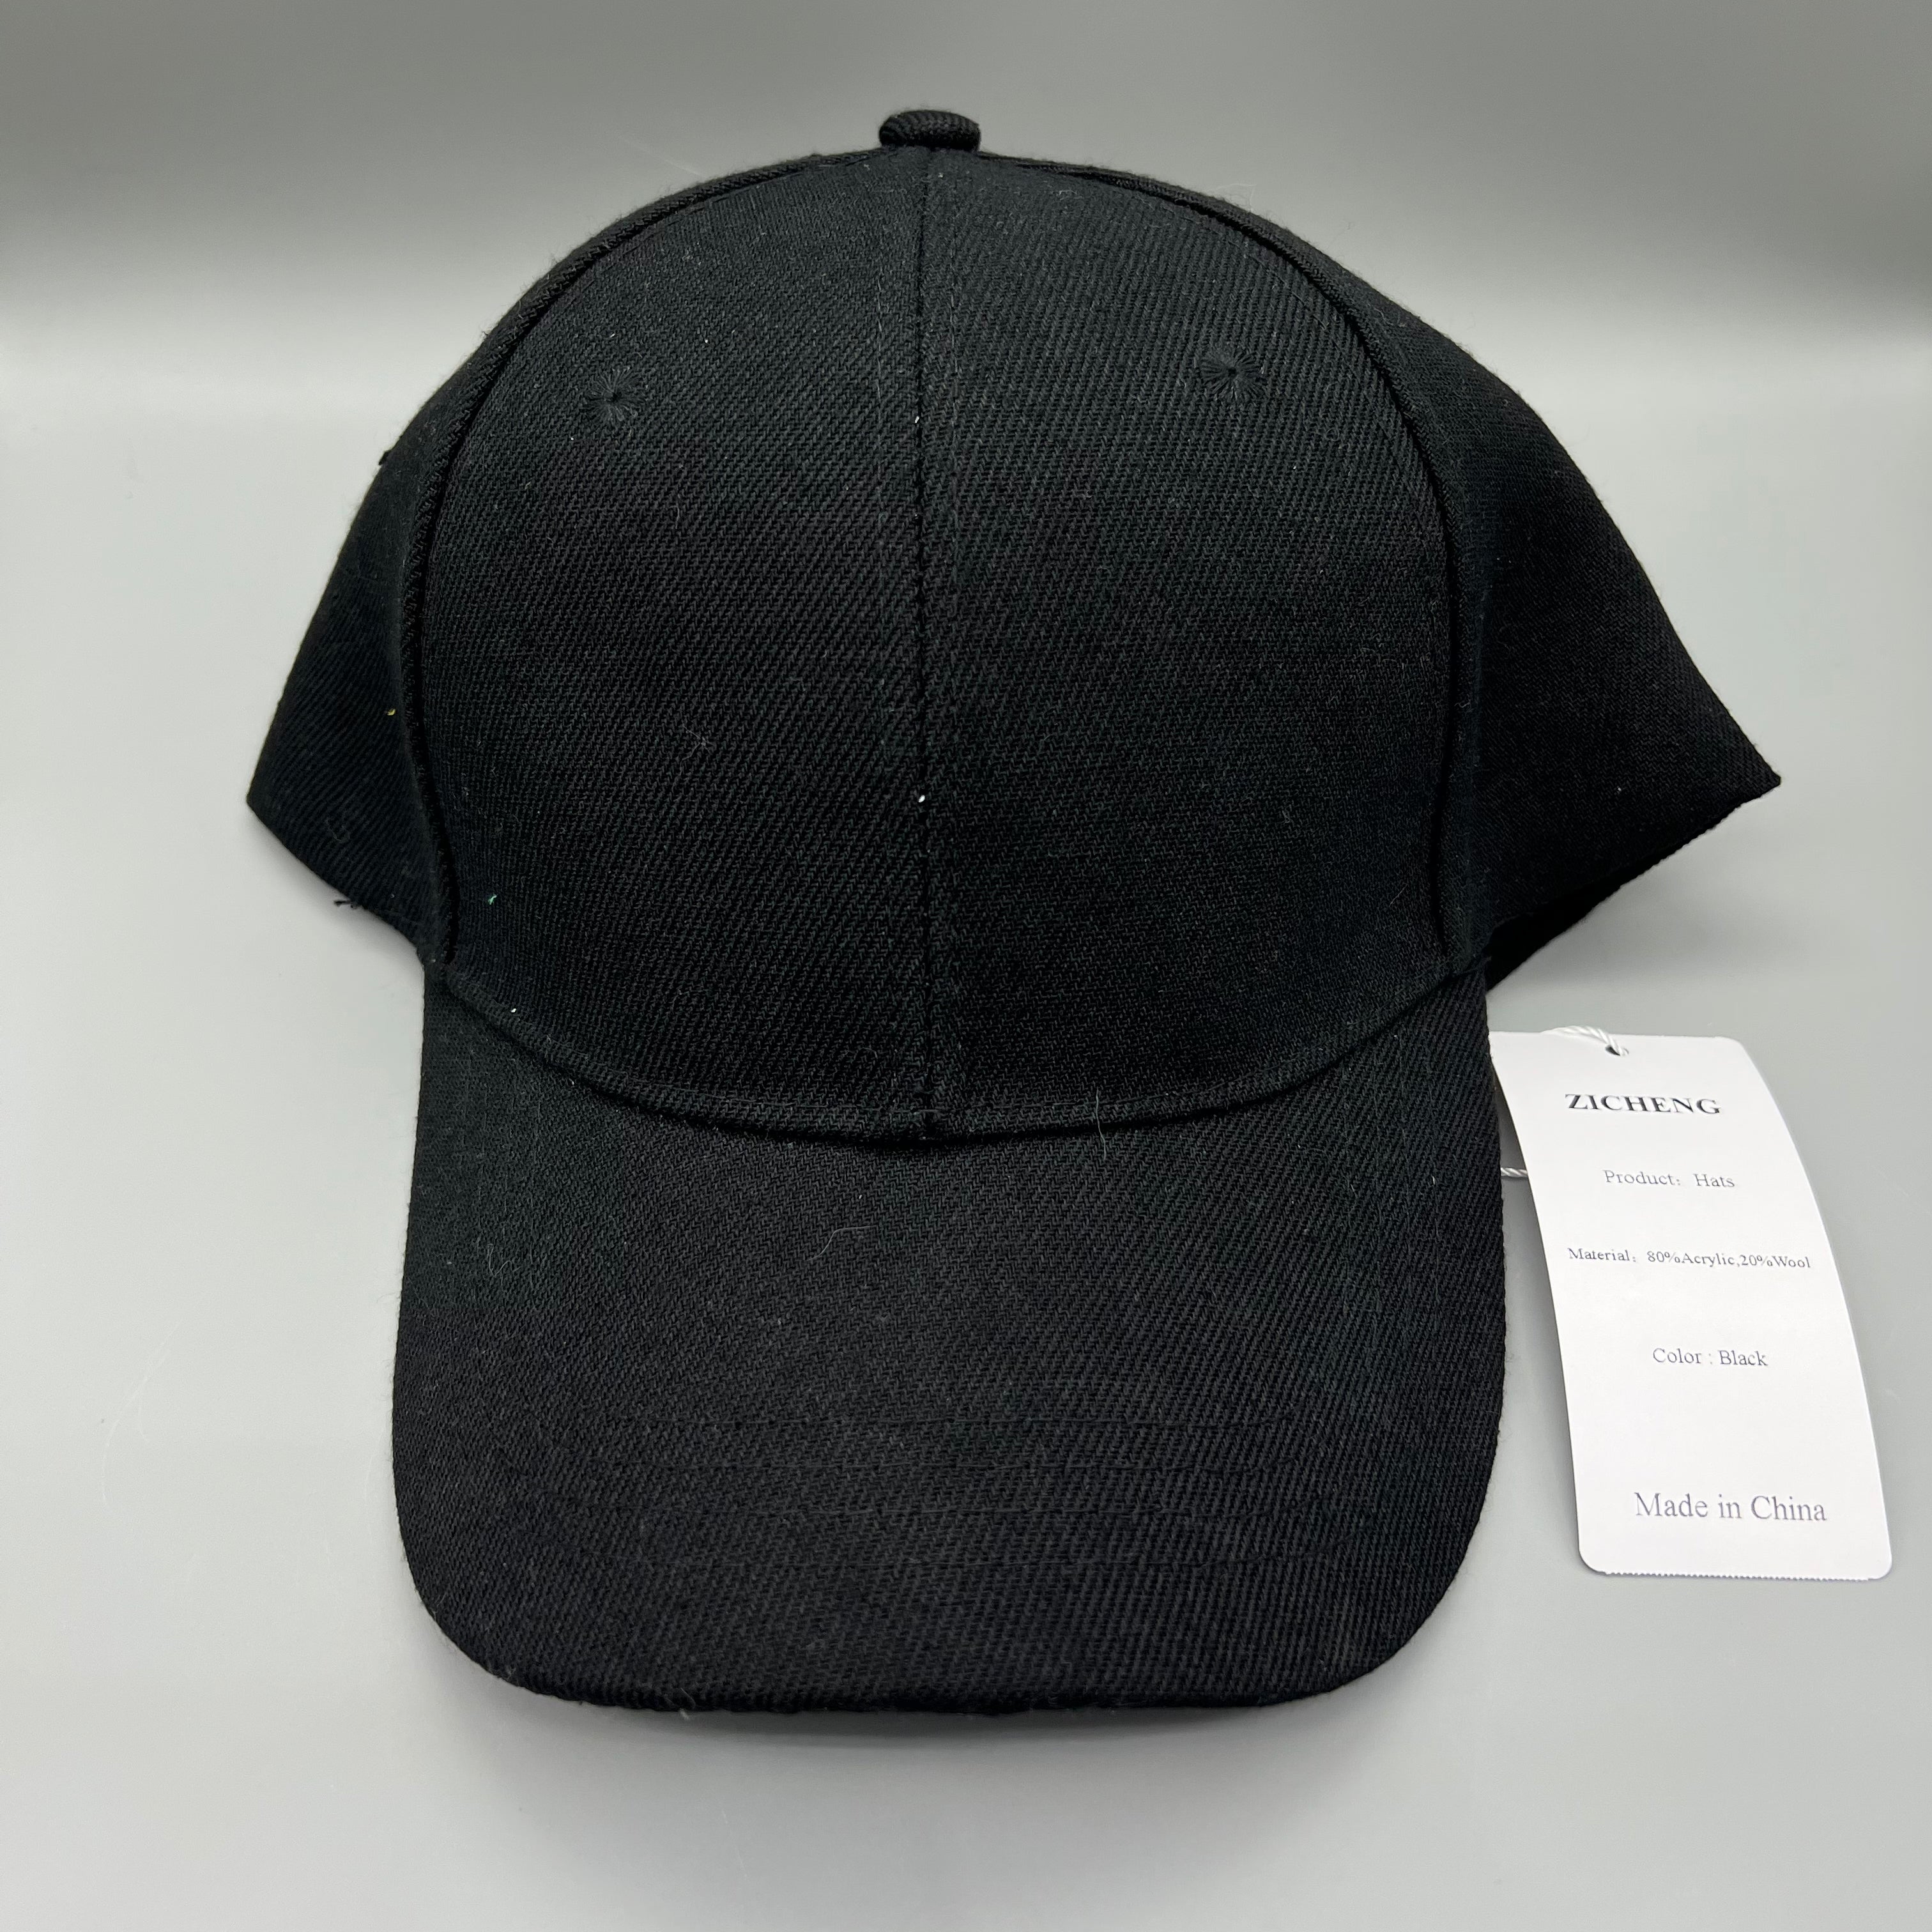 ZICHENG Hats,Fashionable adjustable baseball cap summer anti ultraviol ...